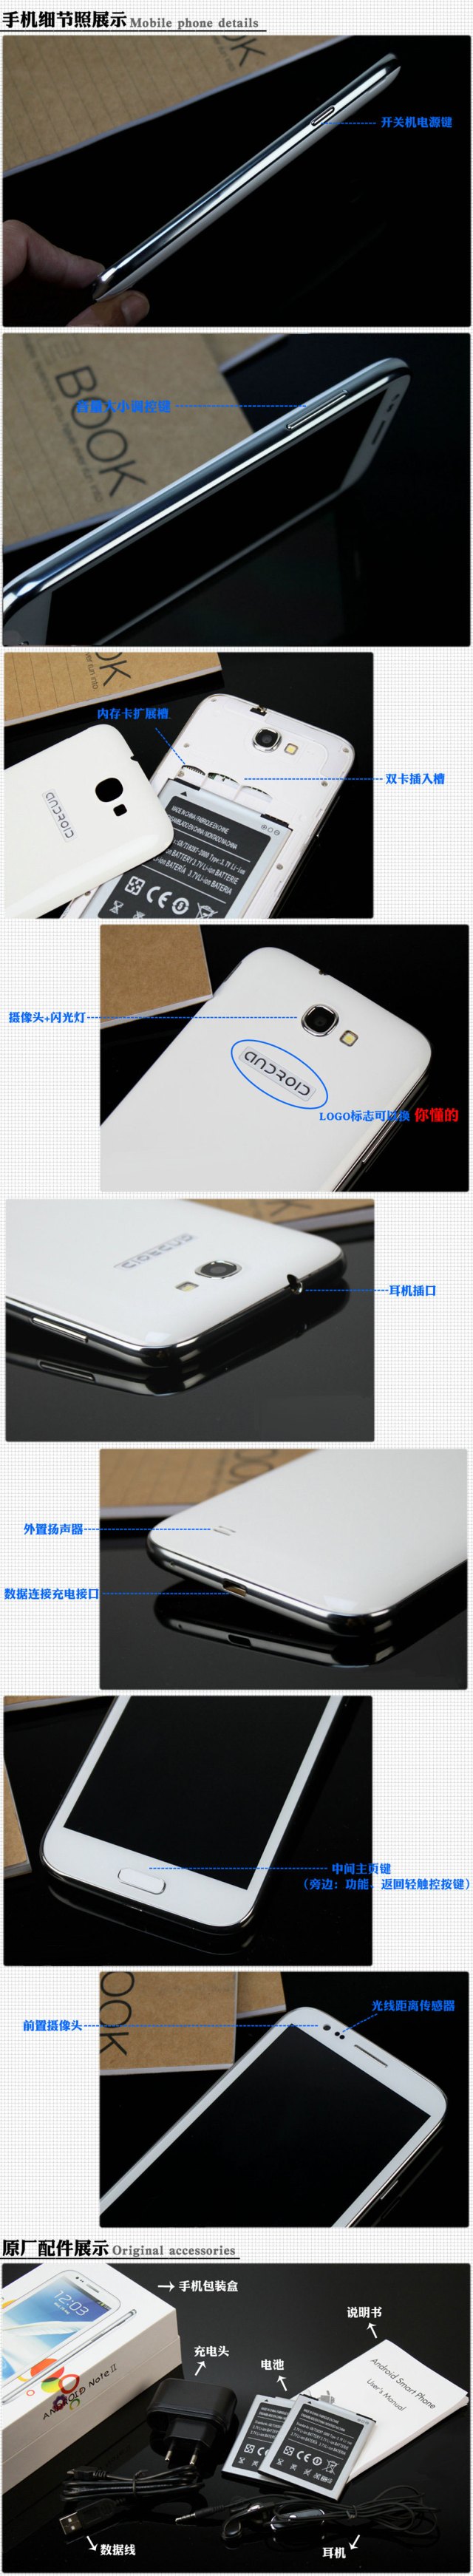 Star S7180 - китайский "клон" Galaxy Note II за $150 (30 фото + 2 видео)